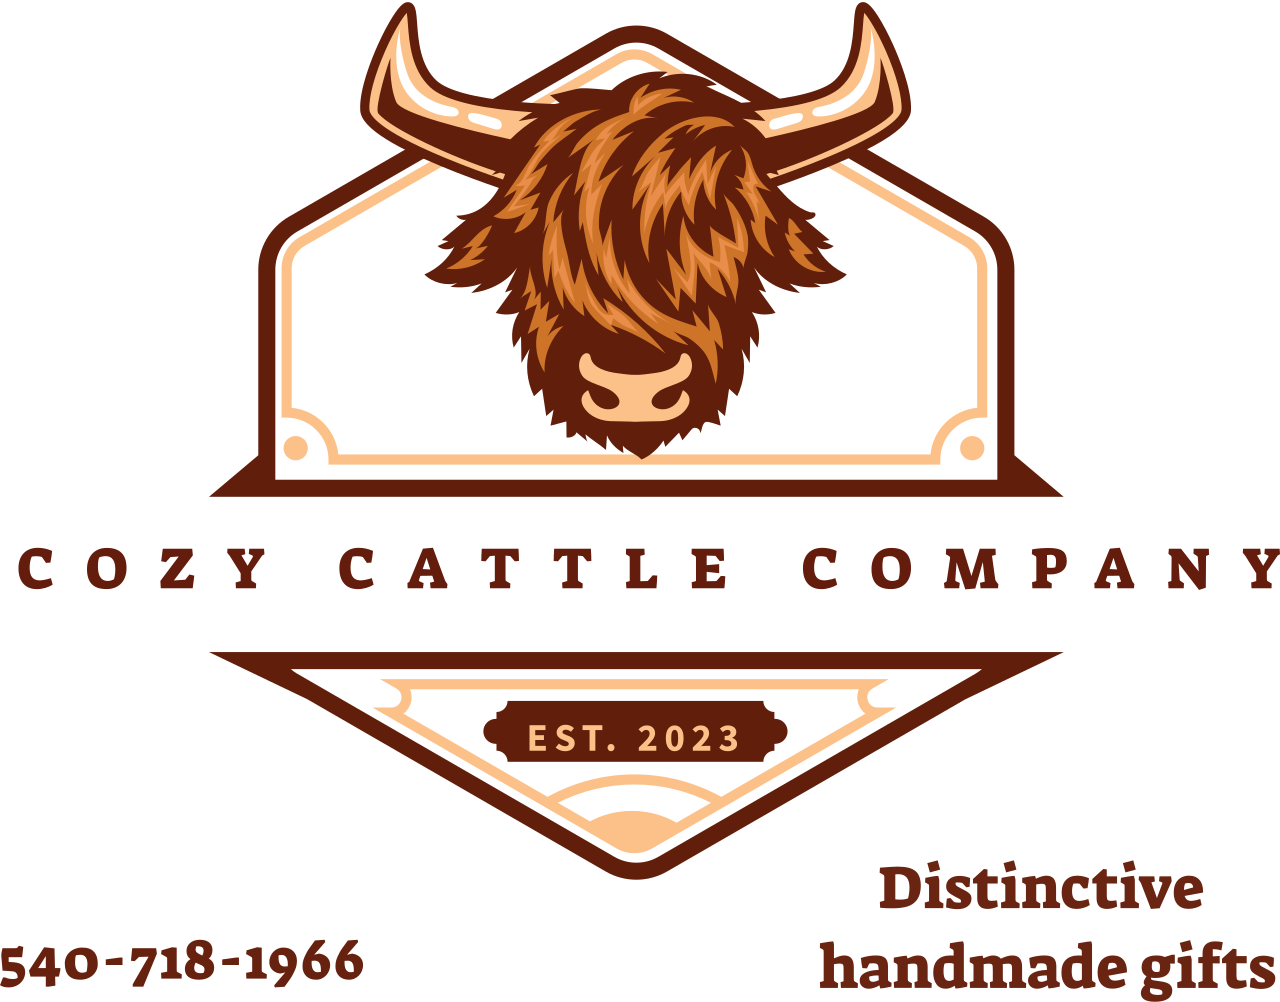 Cozy Cattle Company's logo